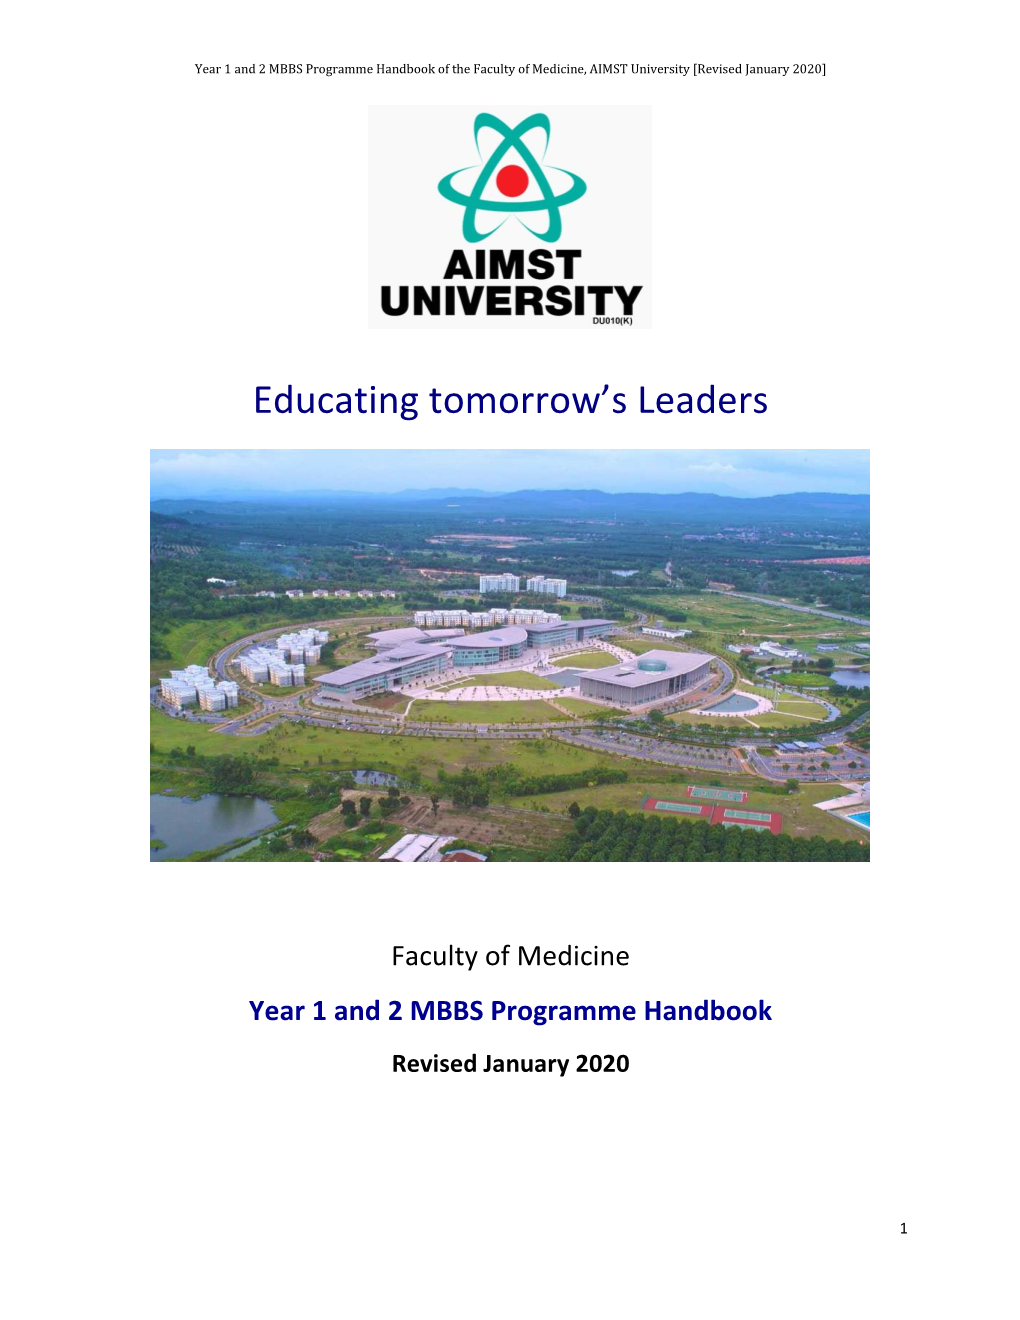 Year 1 and 2 MBBS Programme Handbook, AIMST University